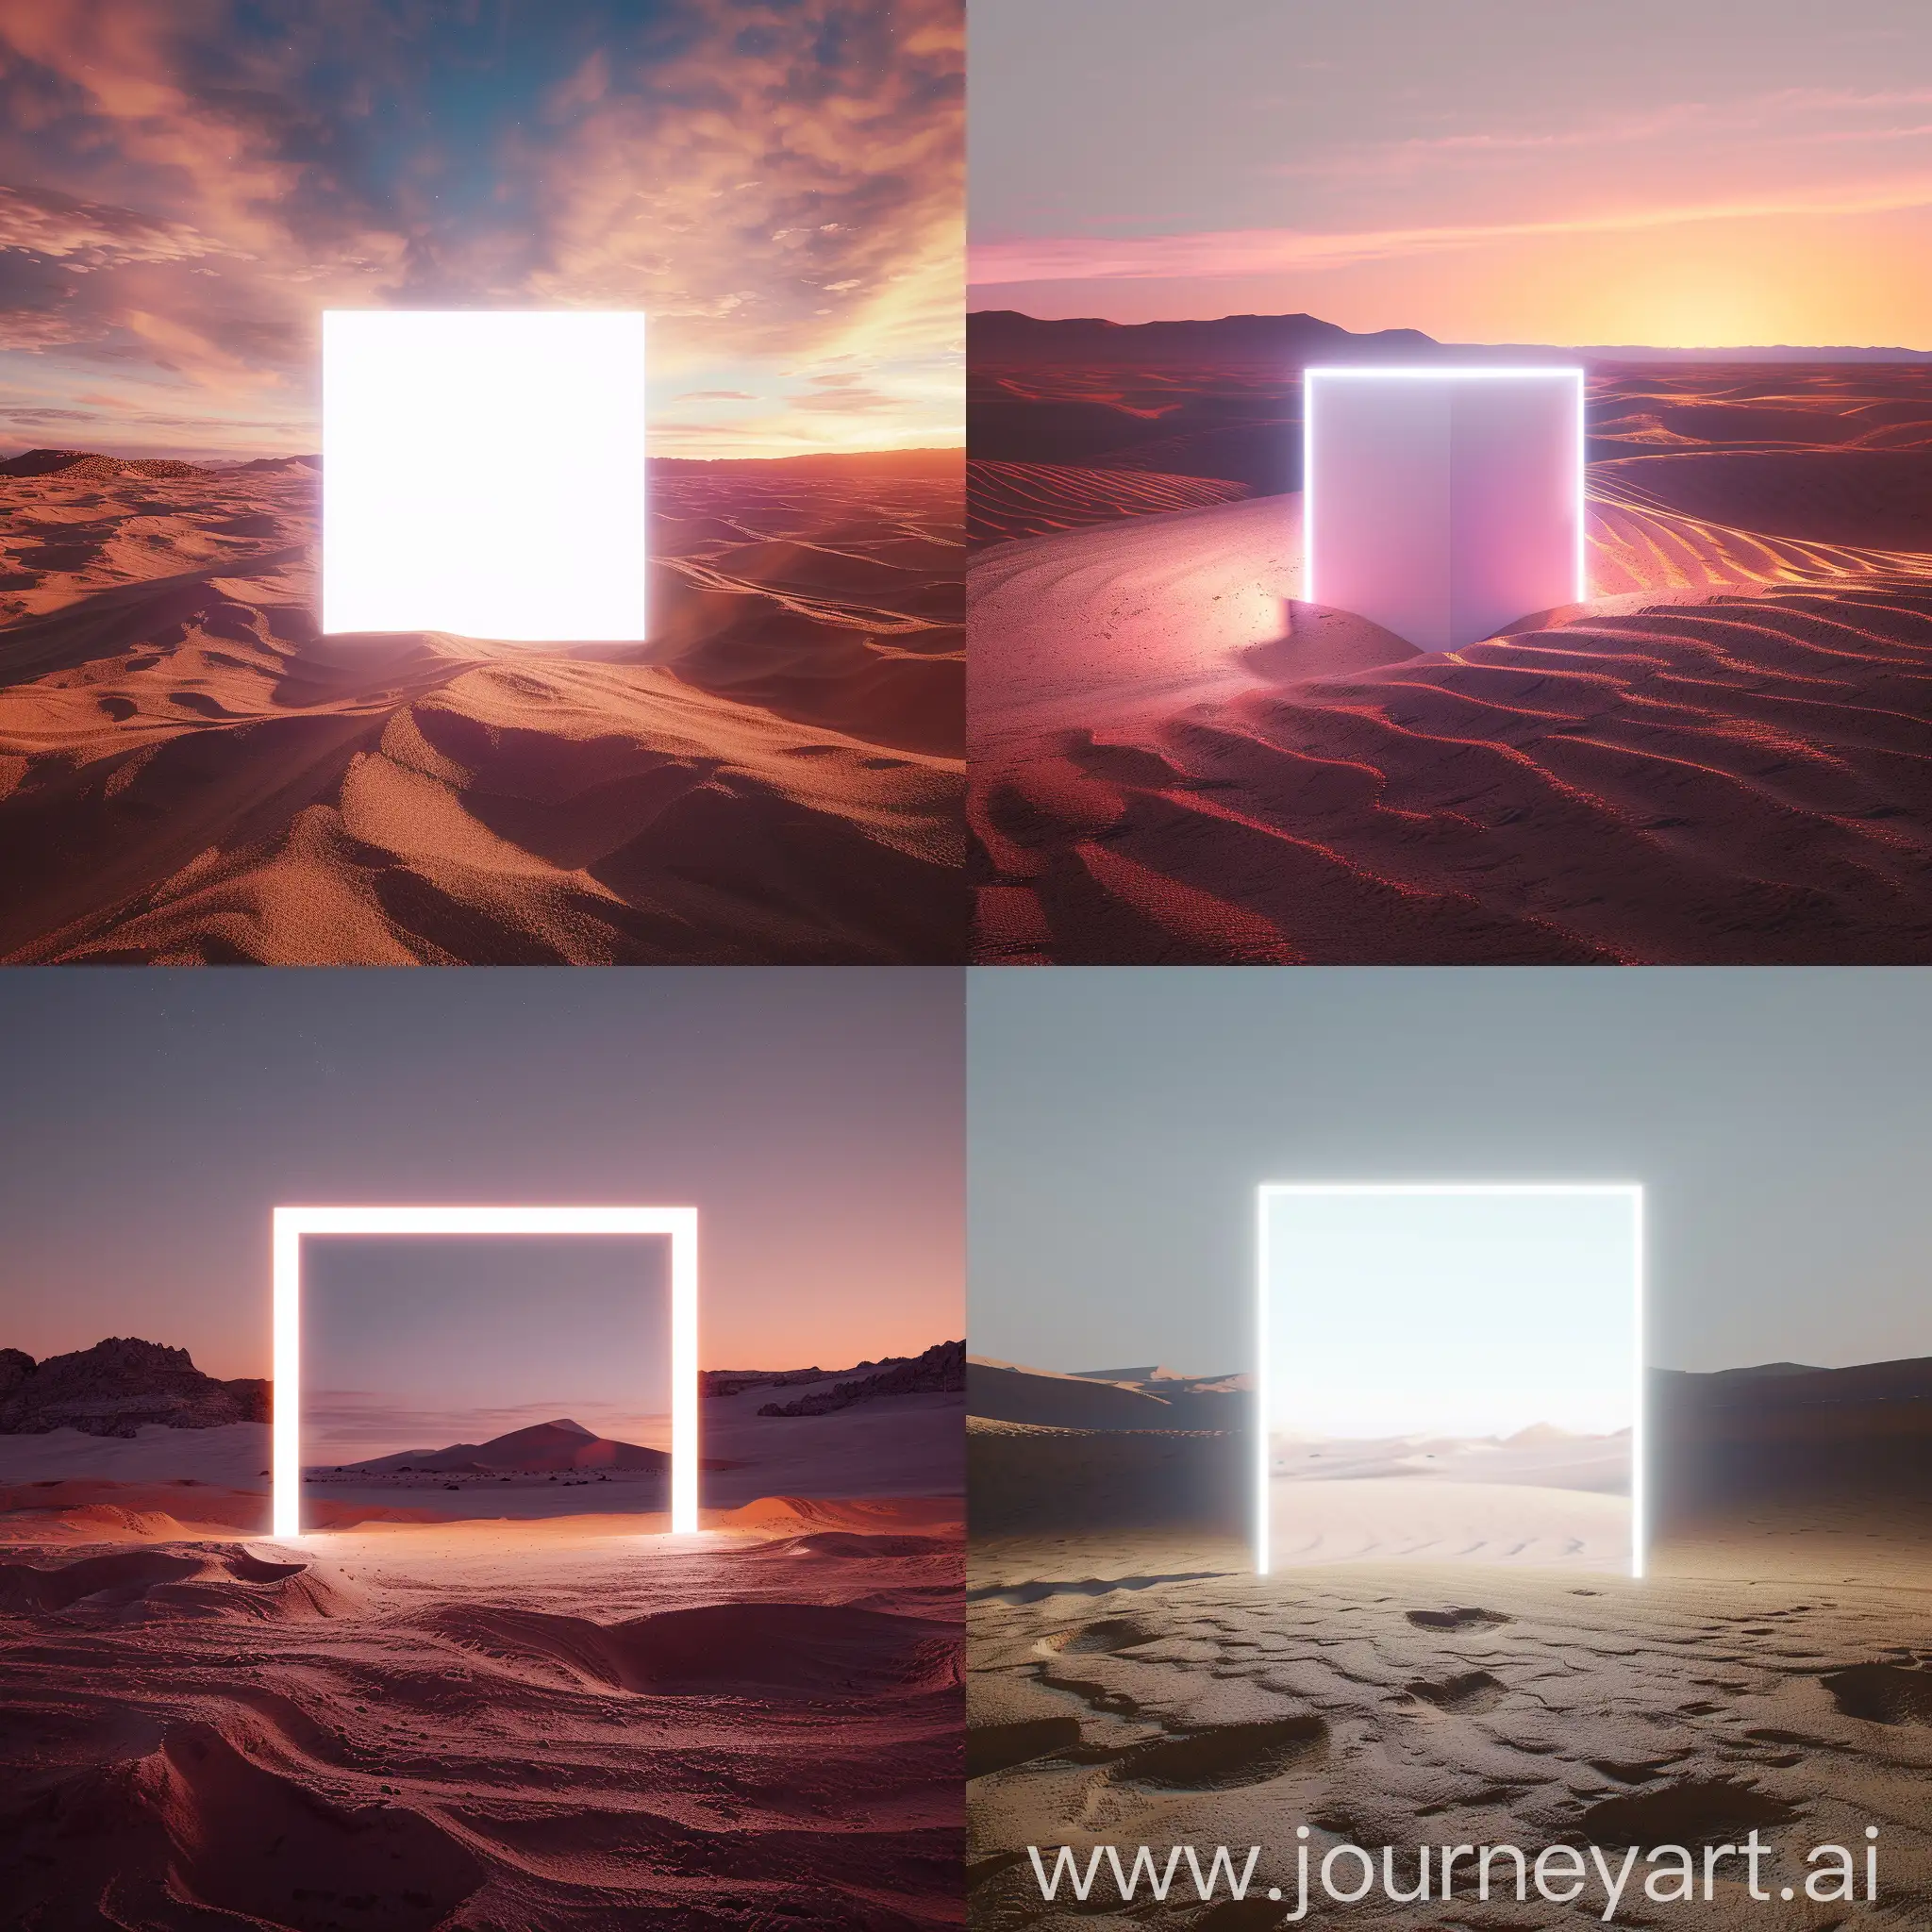 Realistic-Desert-Landscape-with-Neon-White-Block-Centerpiece